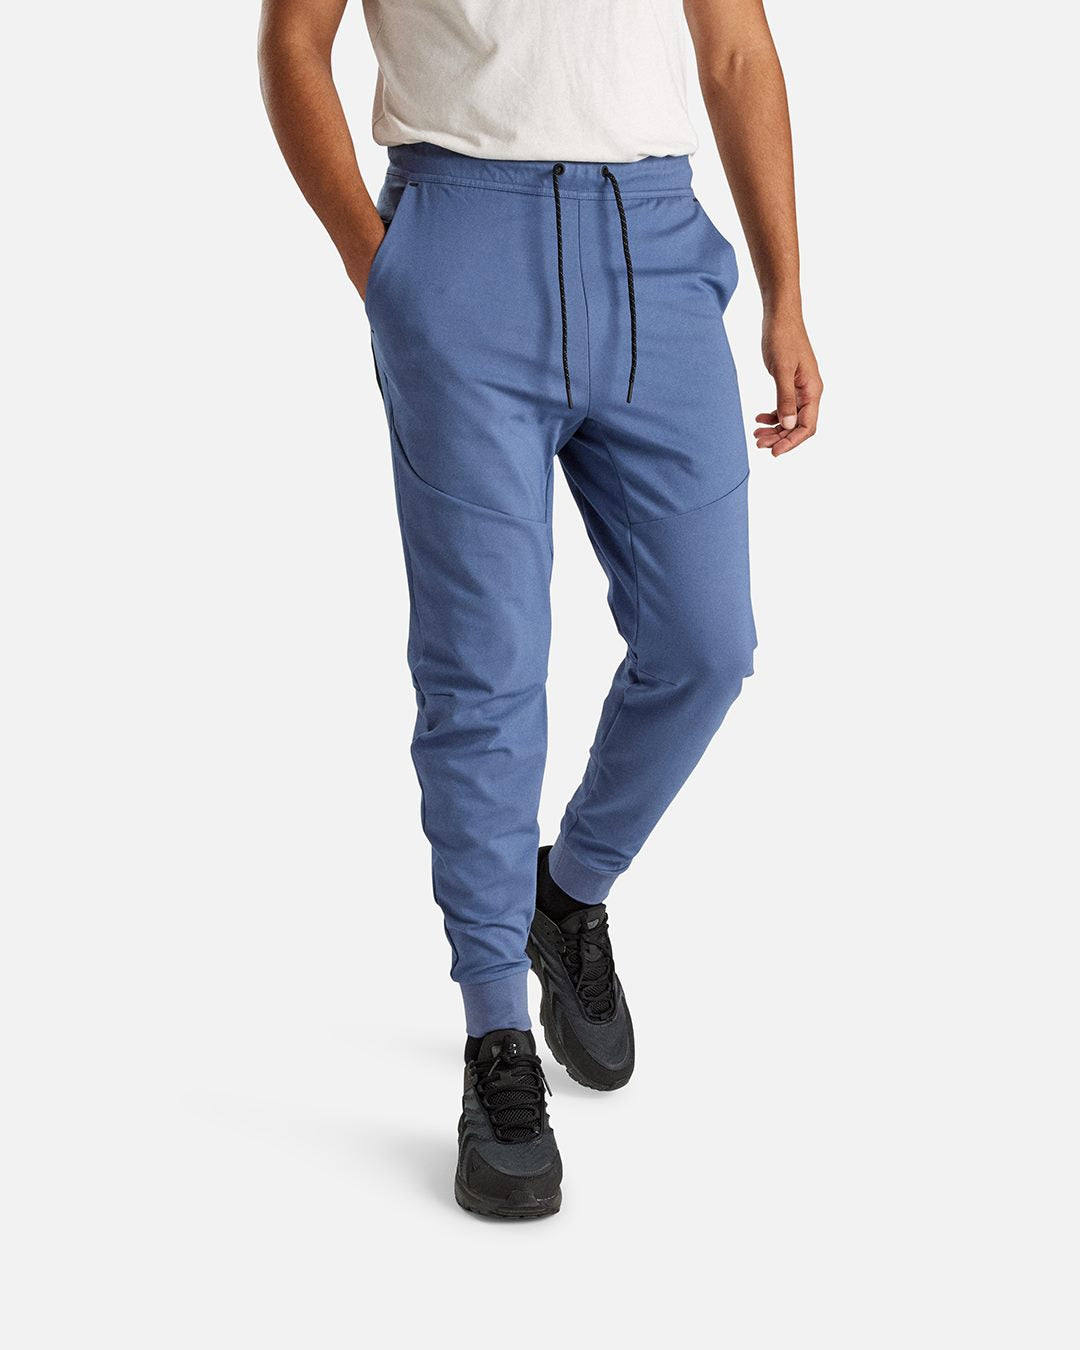 Nike Tech Fleece Lightweight Pants - Blue/Black